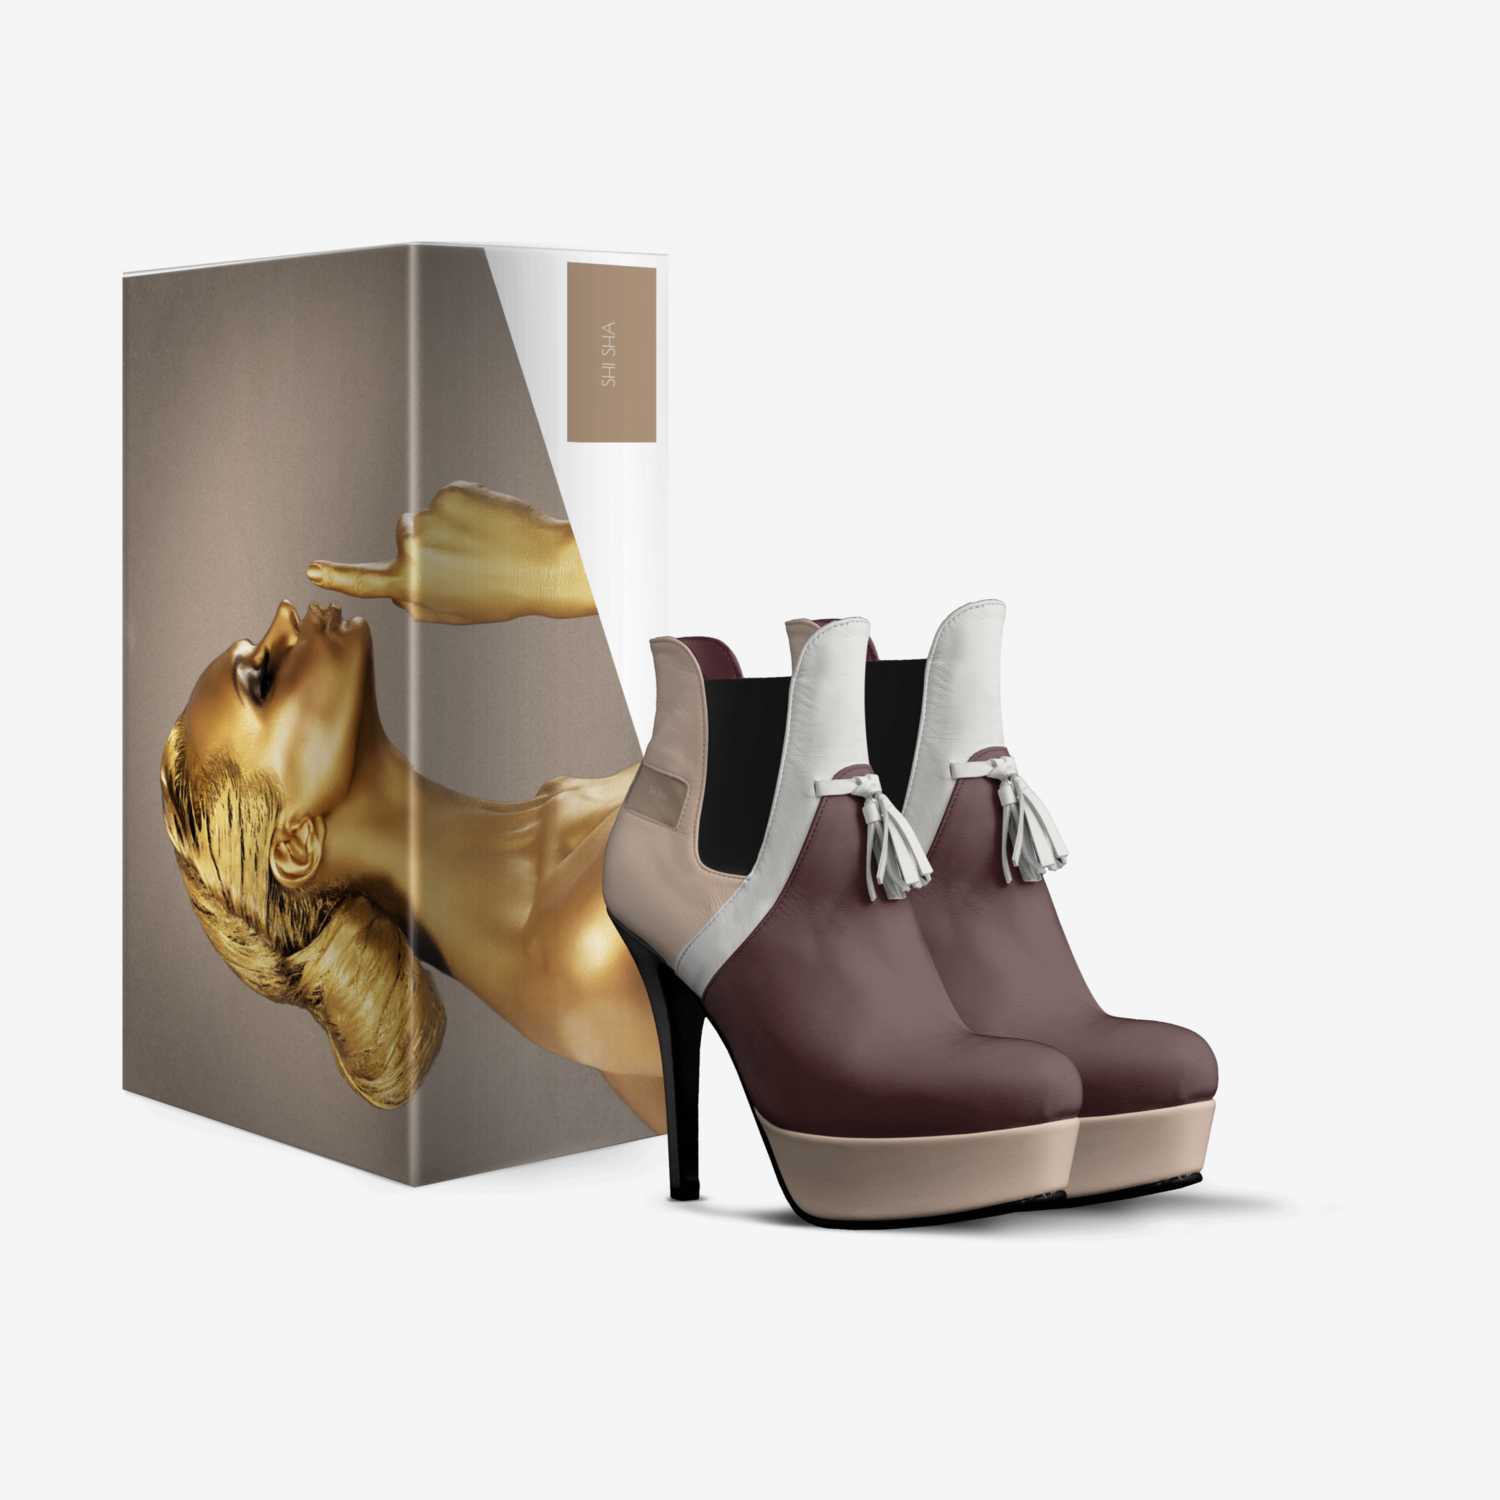 SHI SHA custom made in Italy shoes by Shi Sha | Box view